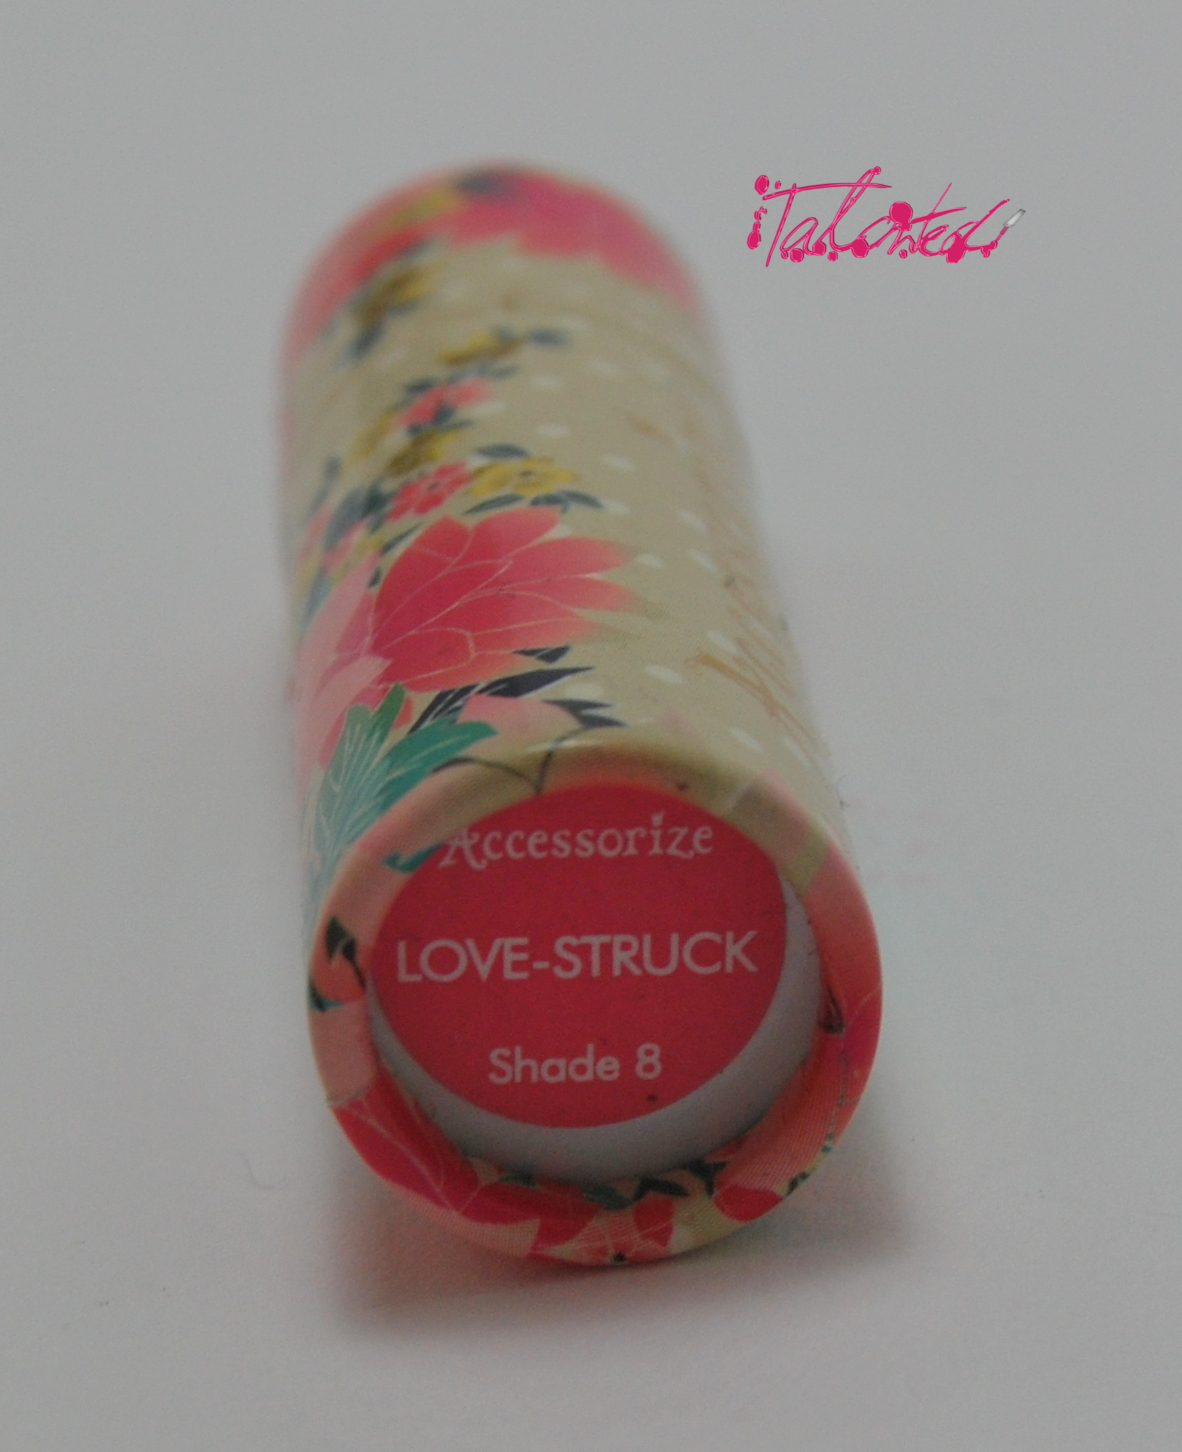 Accessorize Lovestruck lipstick